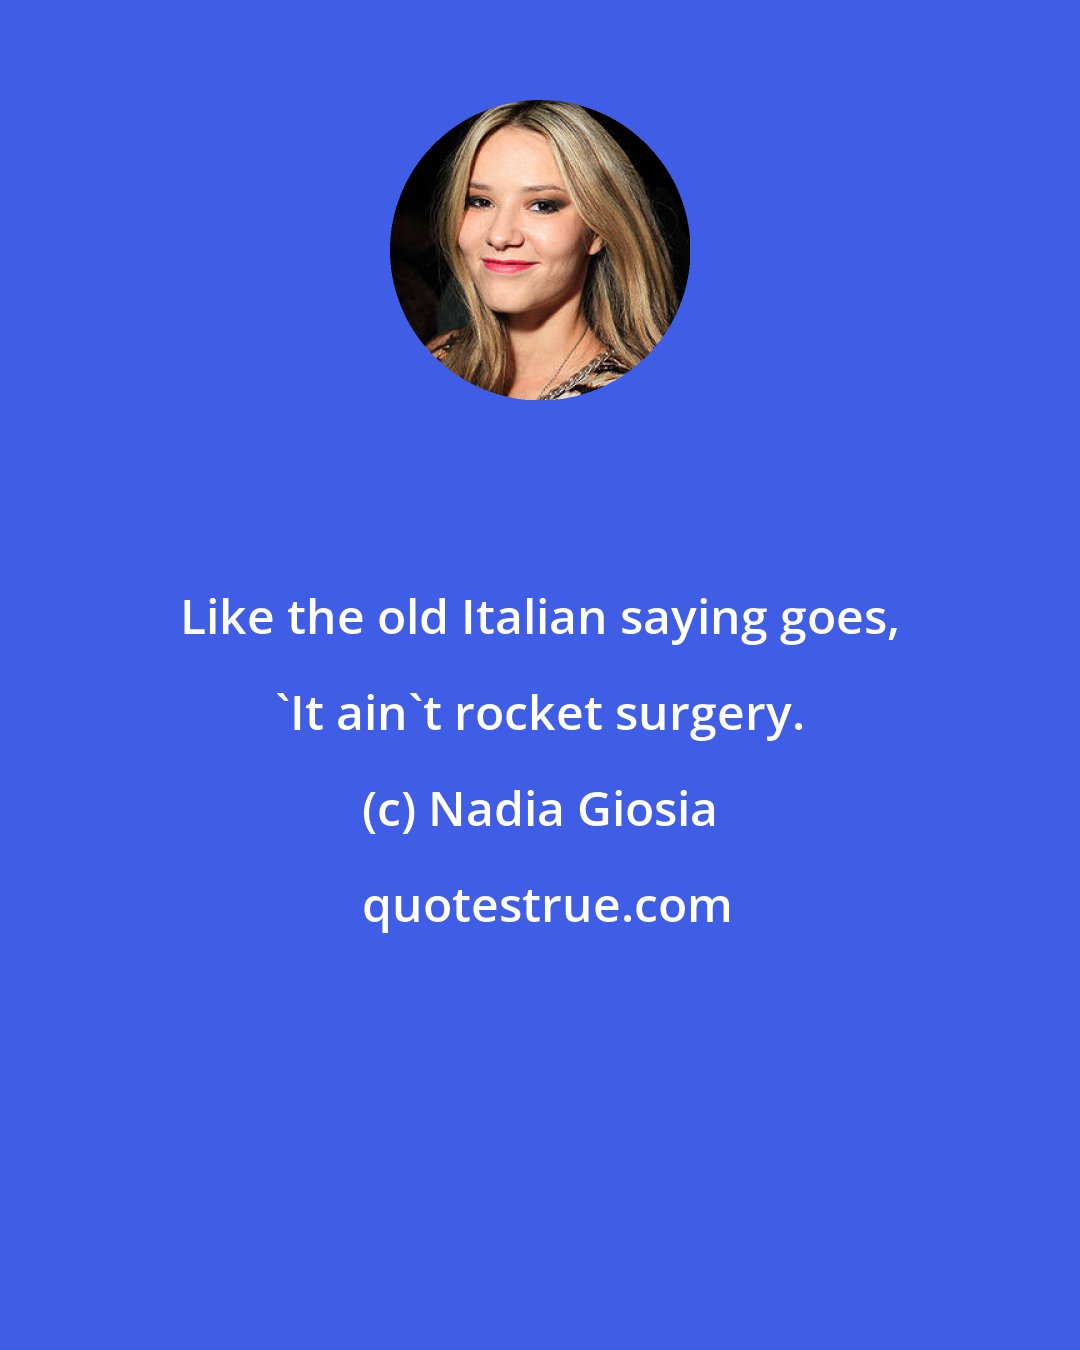 Nadia Giosia: Like the old Italian saying goes, 'It ain't rocket surgery.